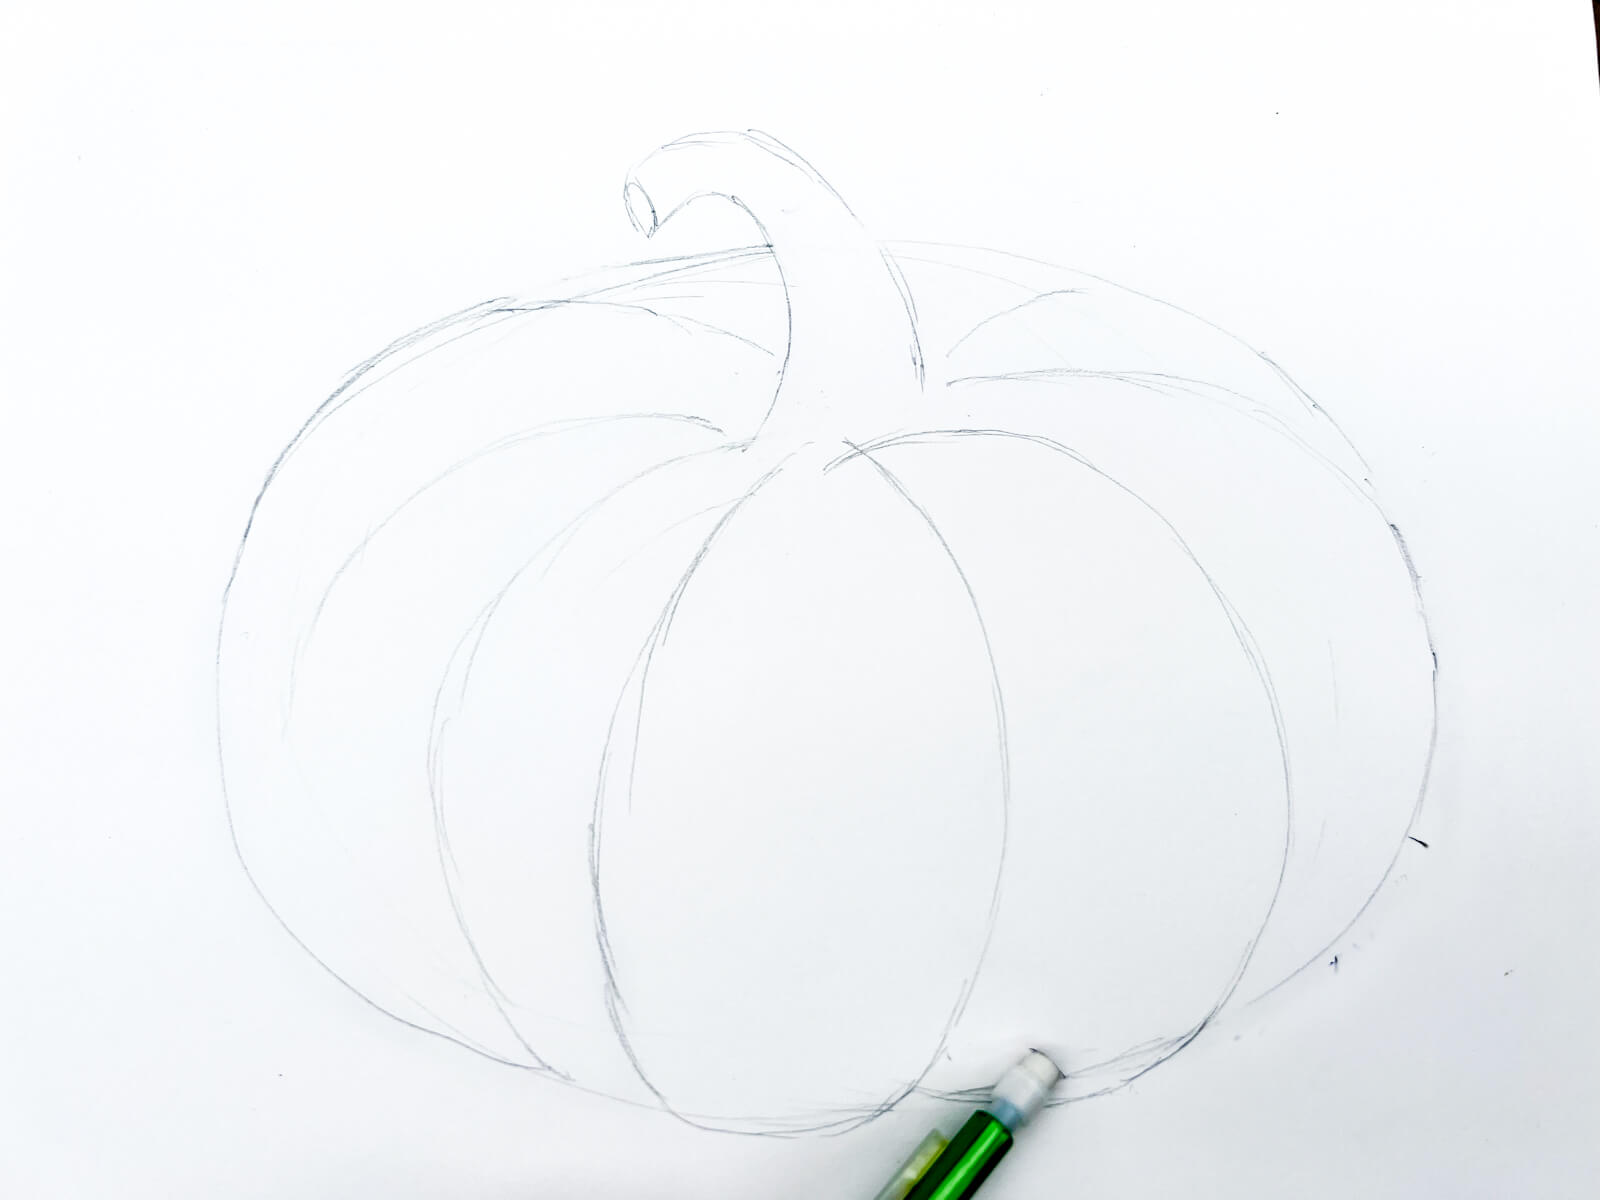 An eraser removes sketch marks from a hand drawn pumpkin.